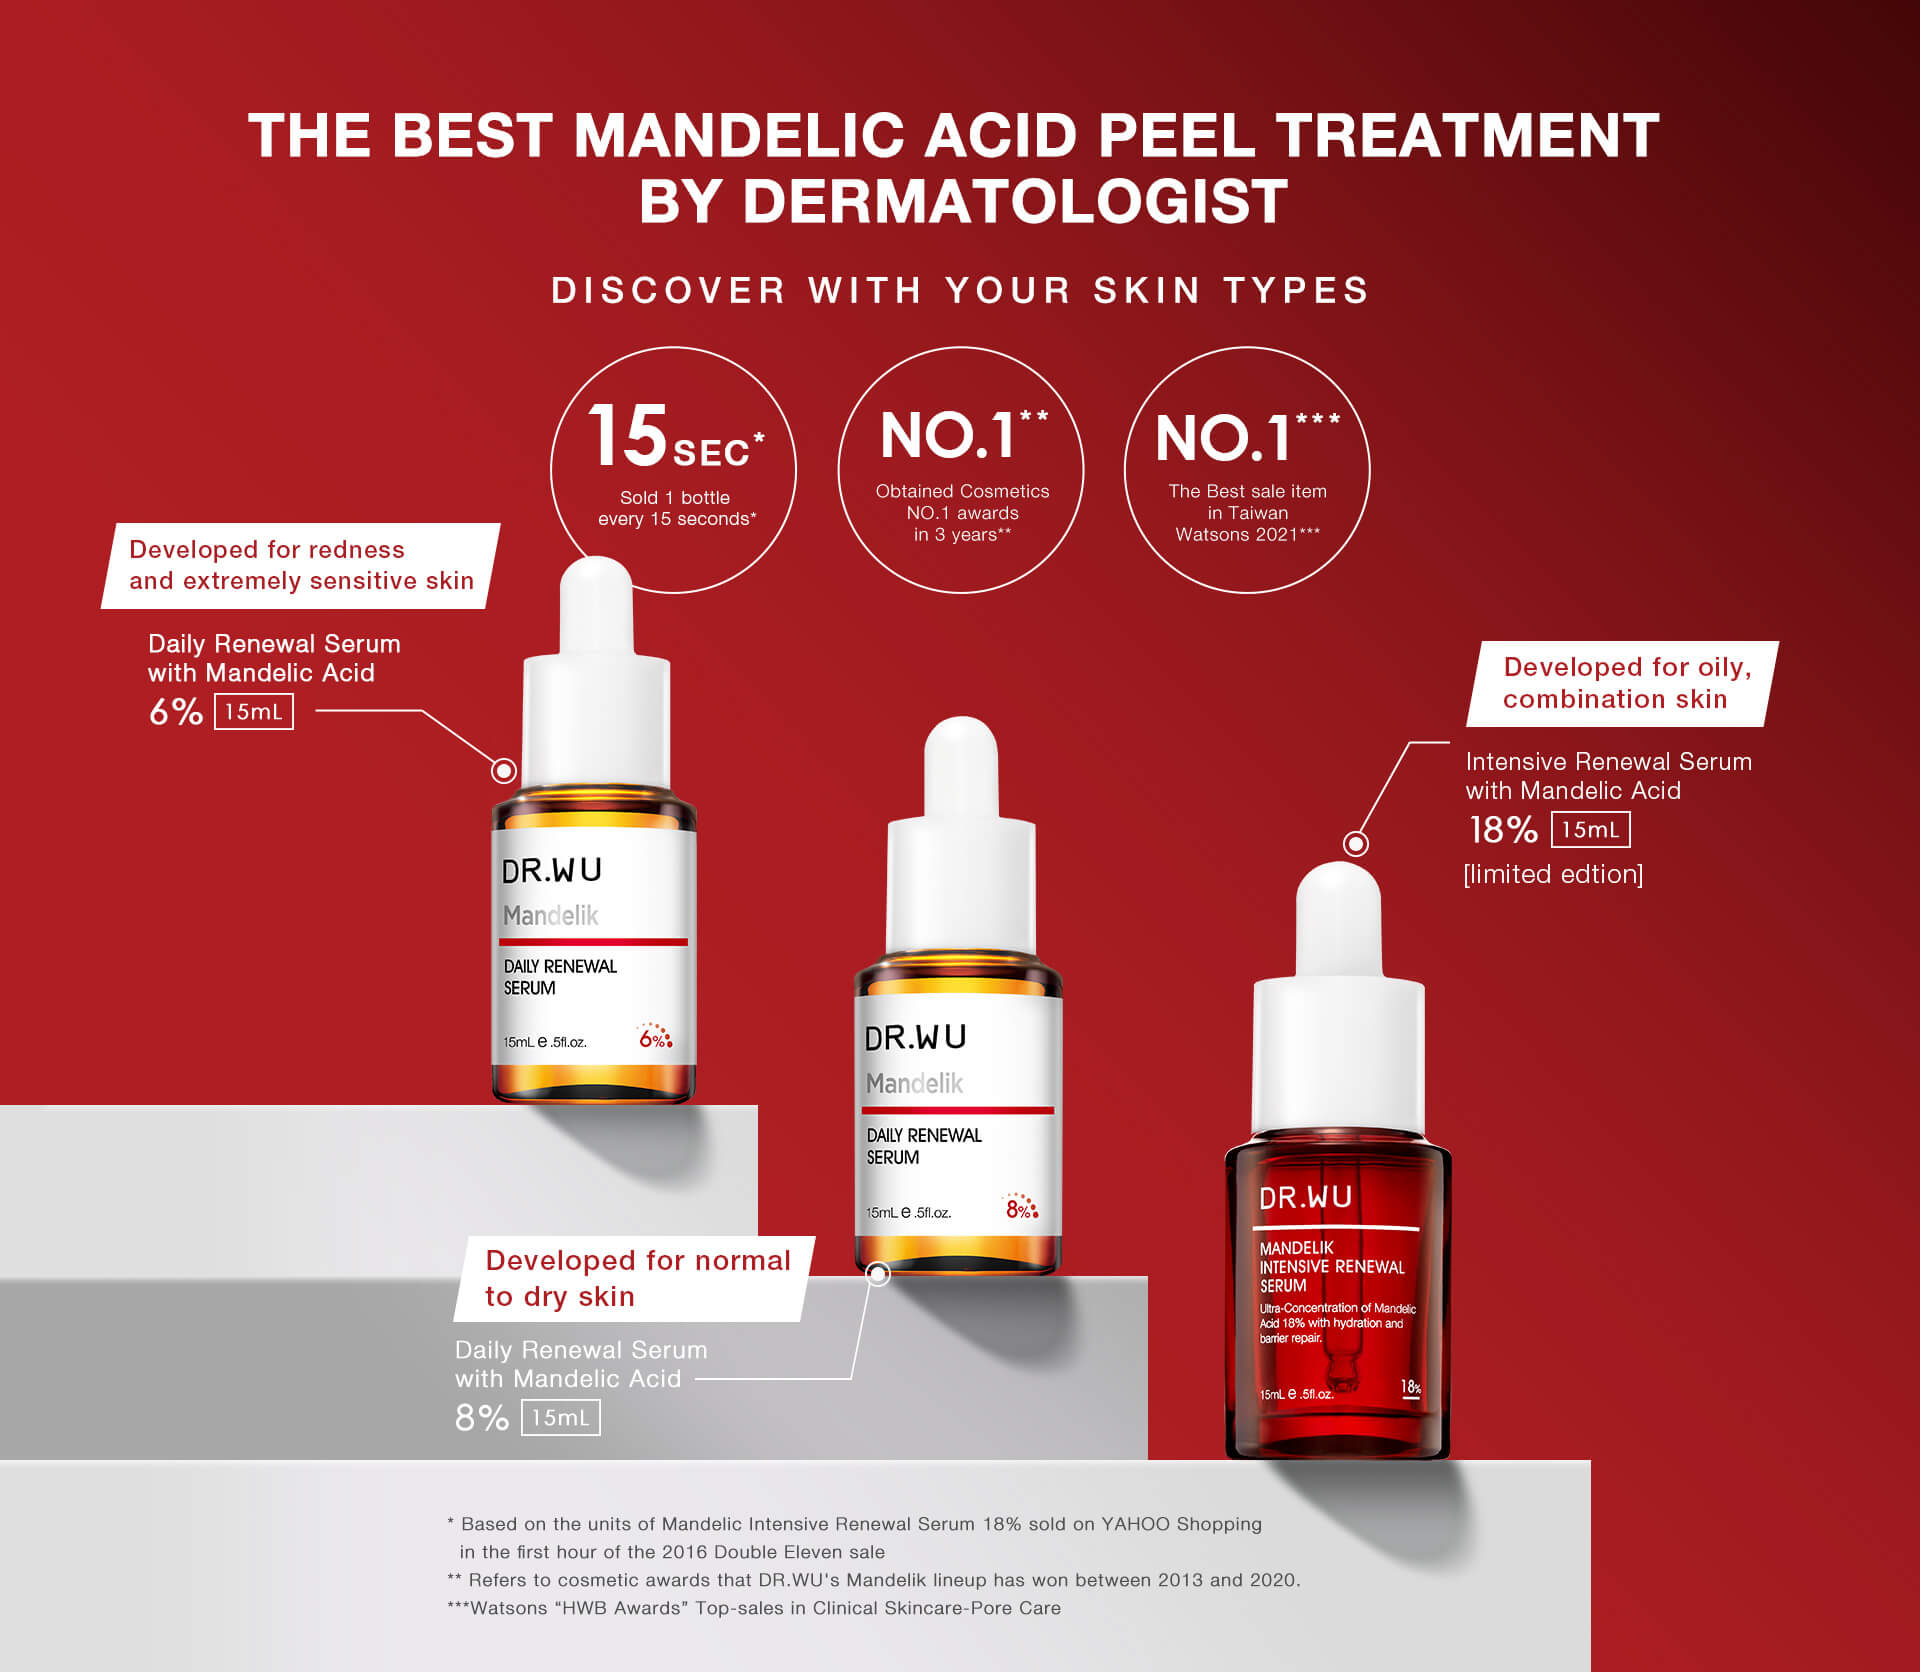 The Best Mandelic Acid Peel Treatment by Dermatologist